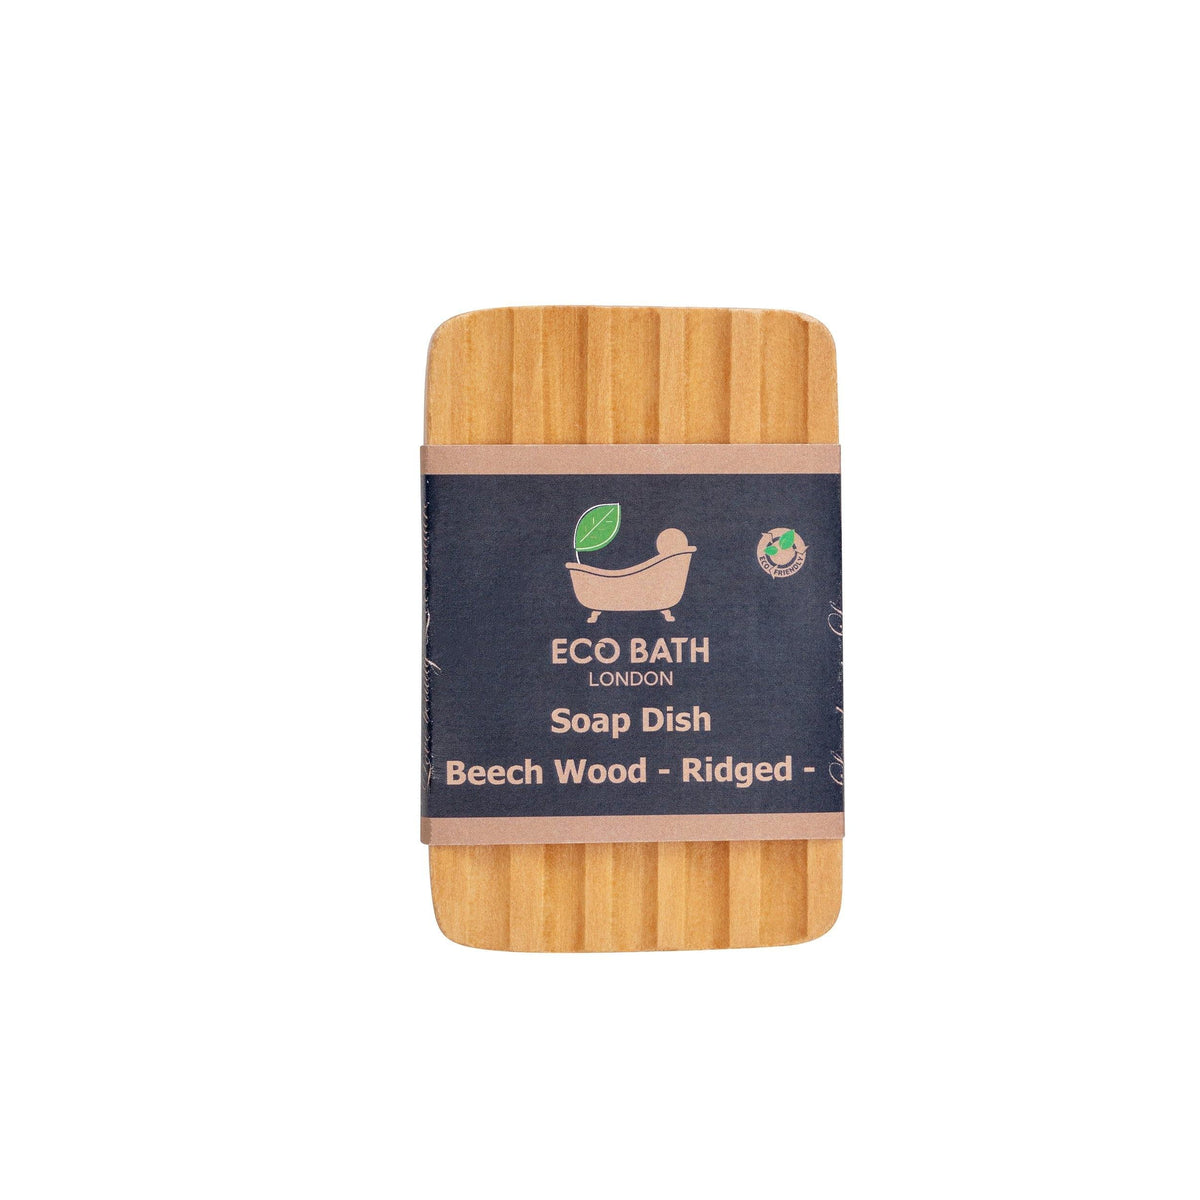 Eco Bath Soap Dish - Beech Wood Ridged - Eco Bath London™